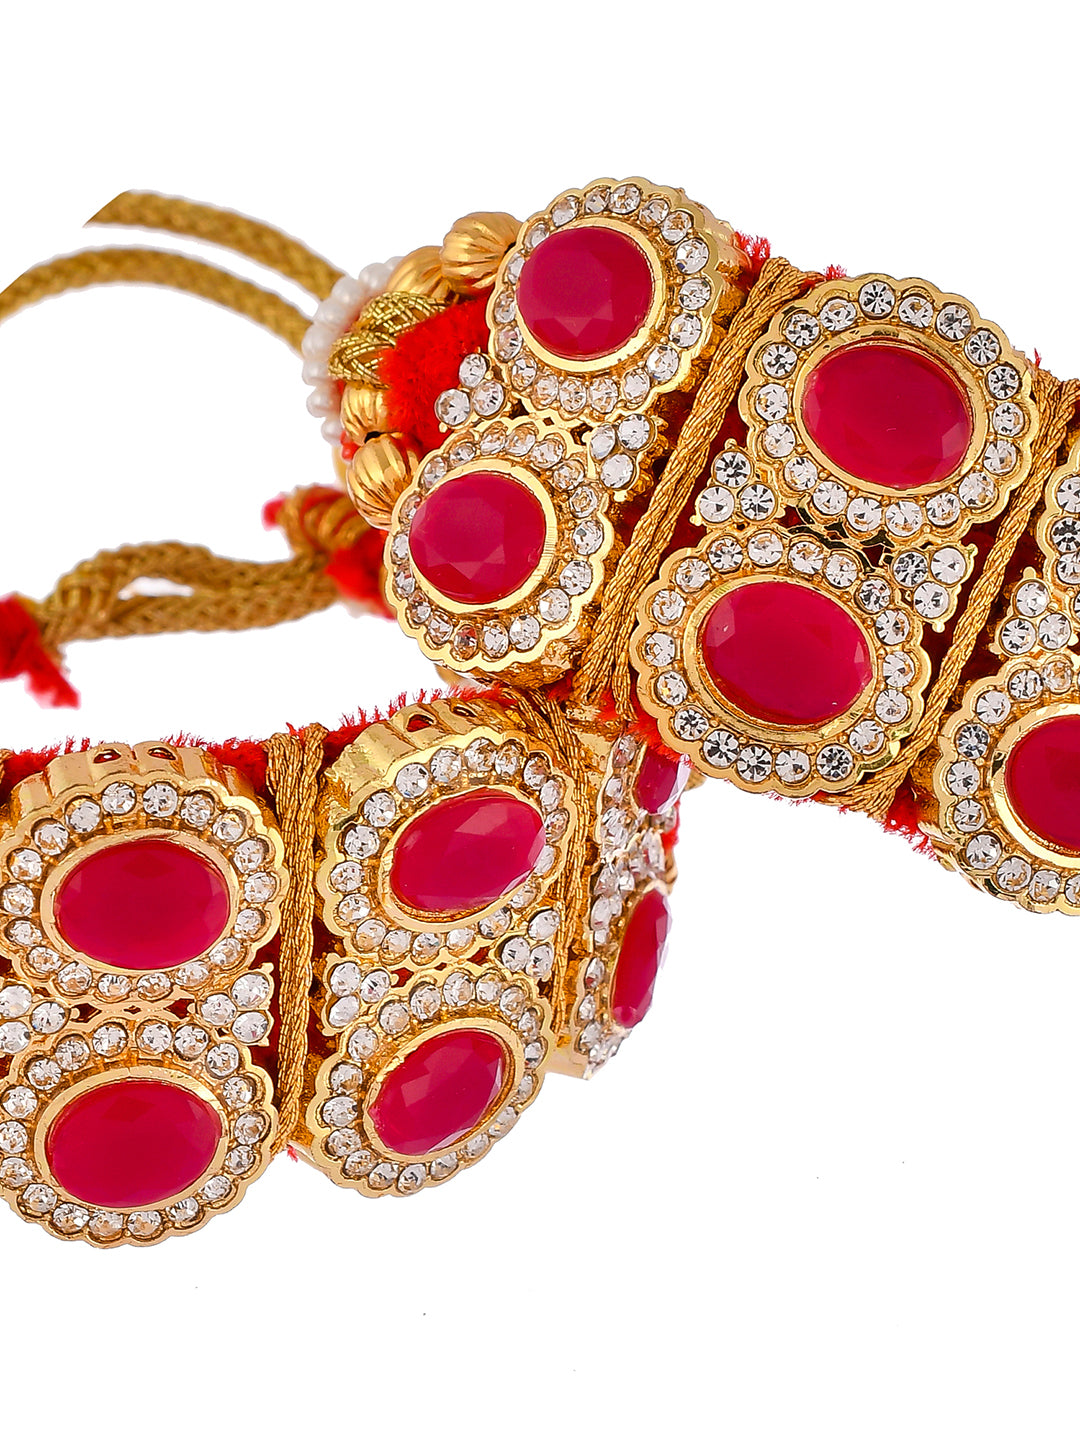 Traditiopnal Temple Gold Plated Rajputana Armlet Bracelet